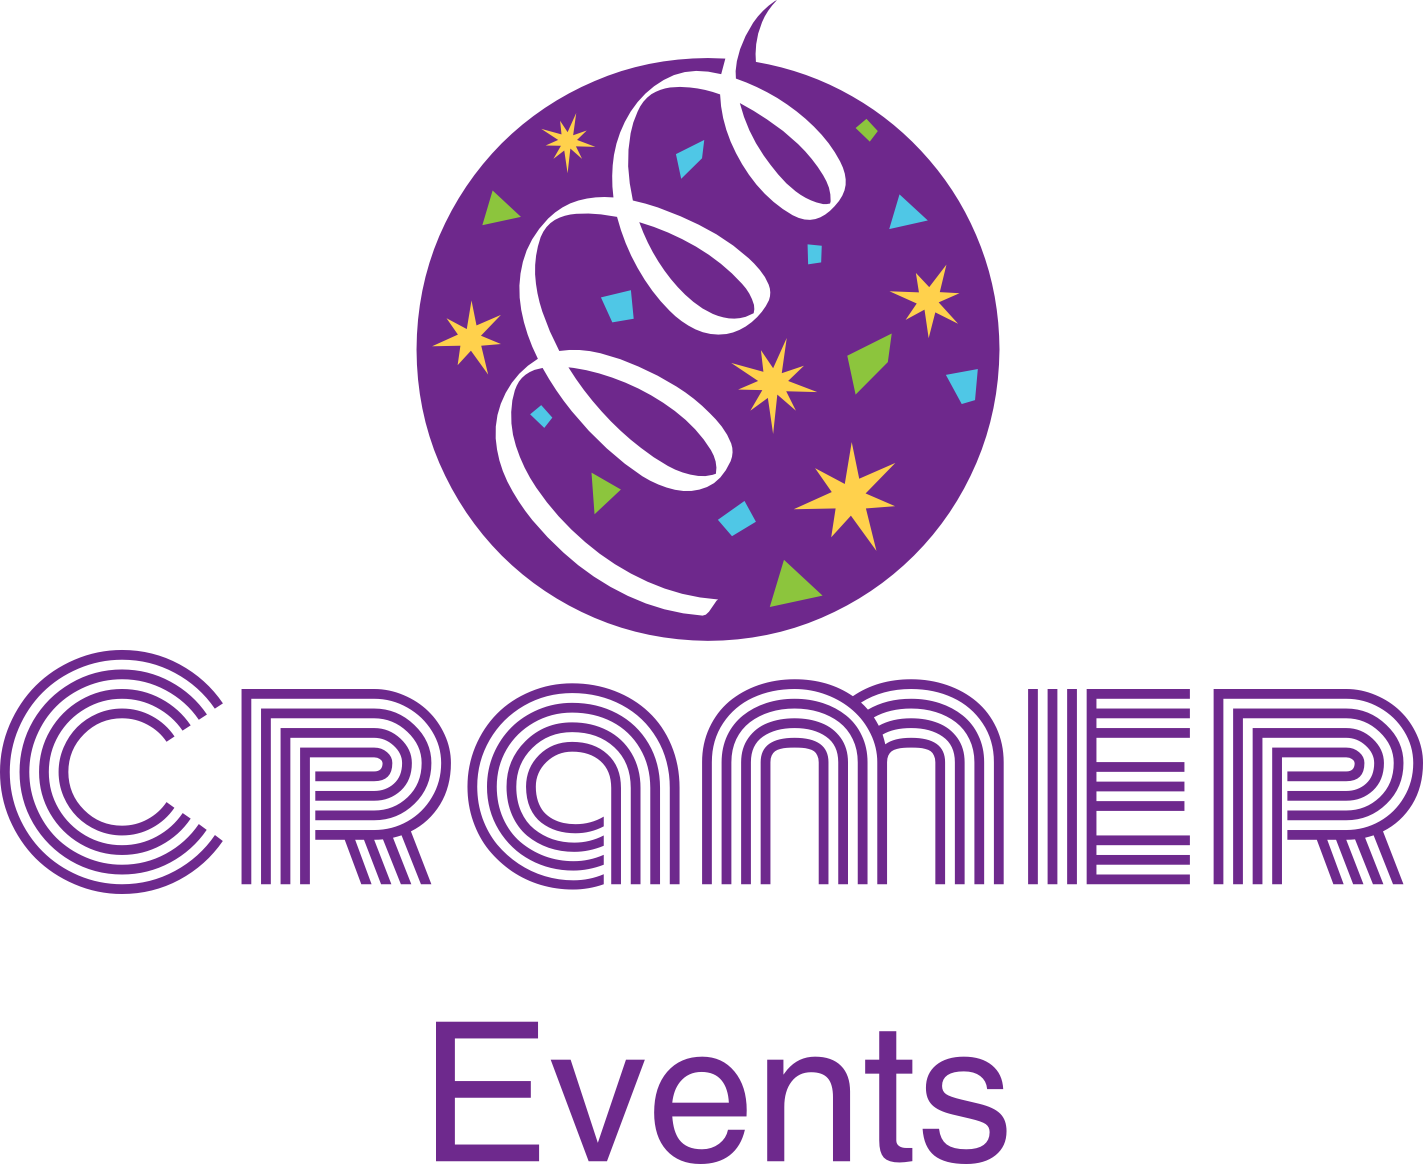 Cramer Events